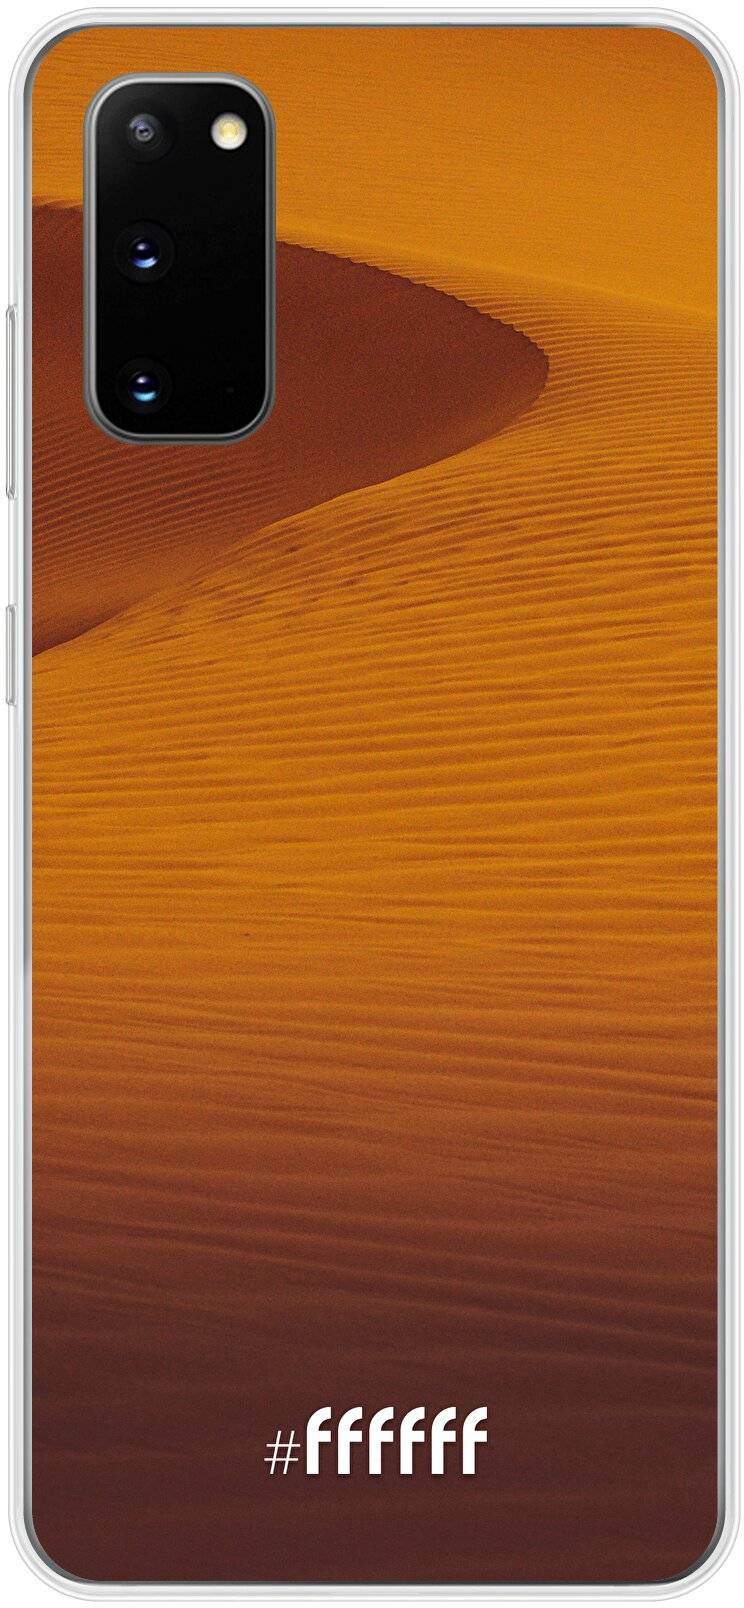 Sand Dunes Galaxy S20